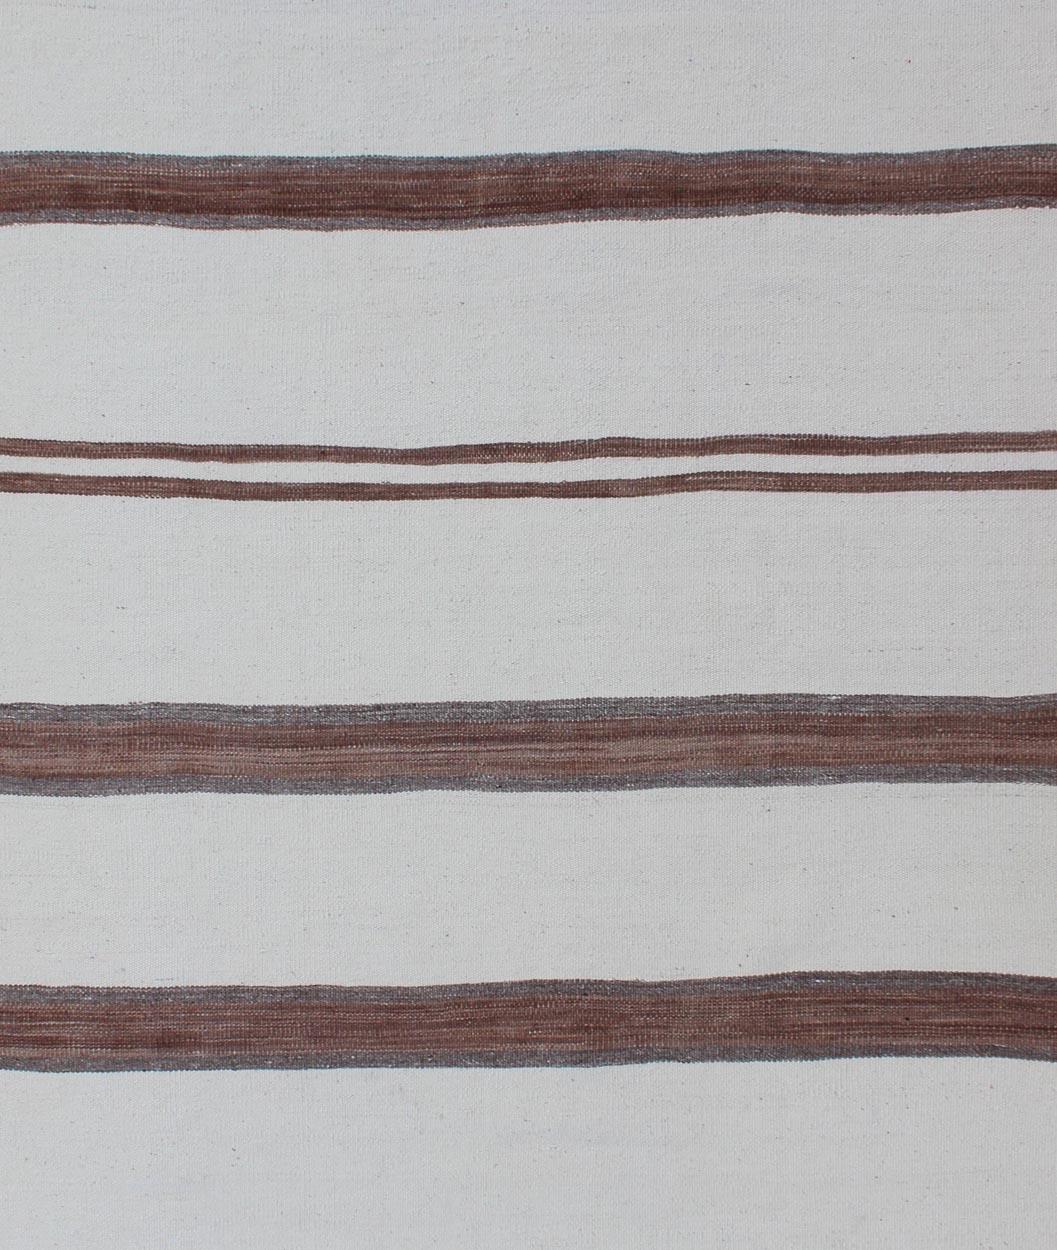 Square size Turkish Vintage Kilim Flat-Weave Rug in Brown and off white with Stripe Design. Keivan Woven Arts / rug EN-179669, country of origin / type: Turkey / Kilim, circa 1950

Measures: 4'2 x 4'7
 
This vintage striped design Turkish Kilim